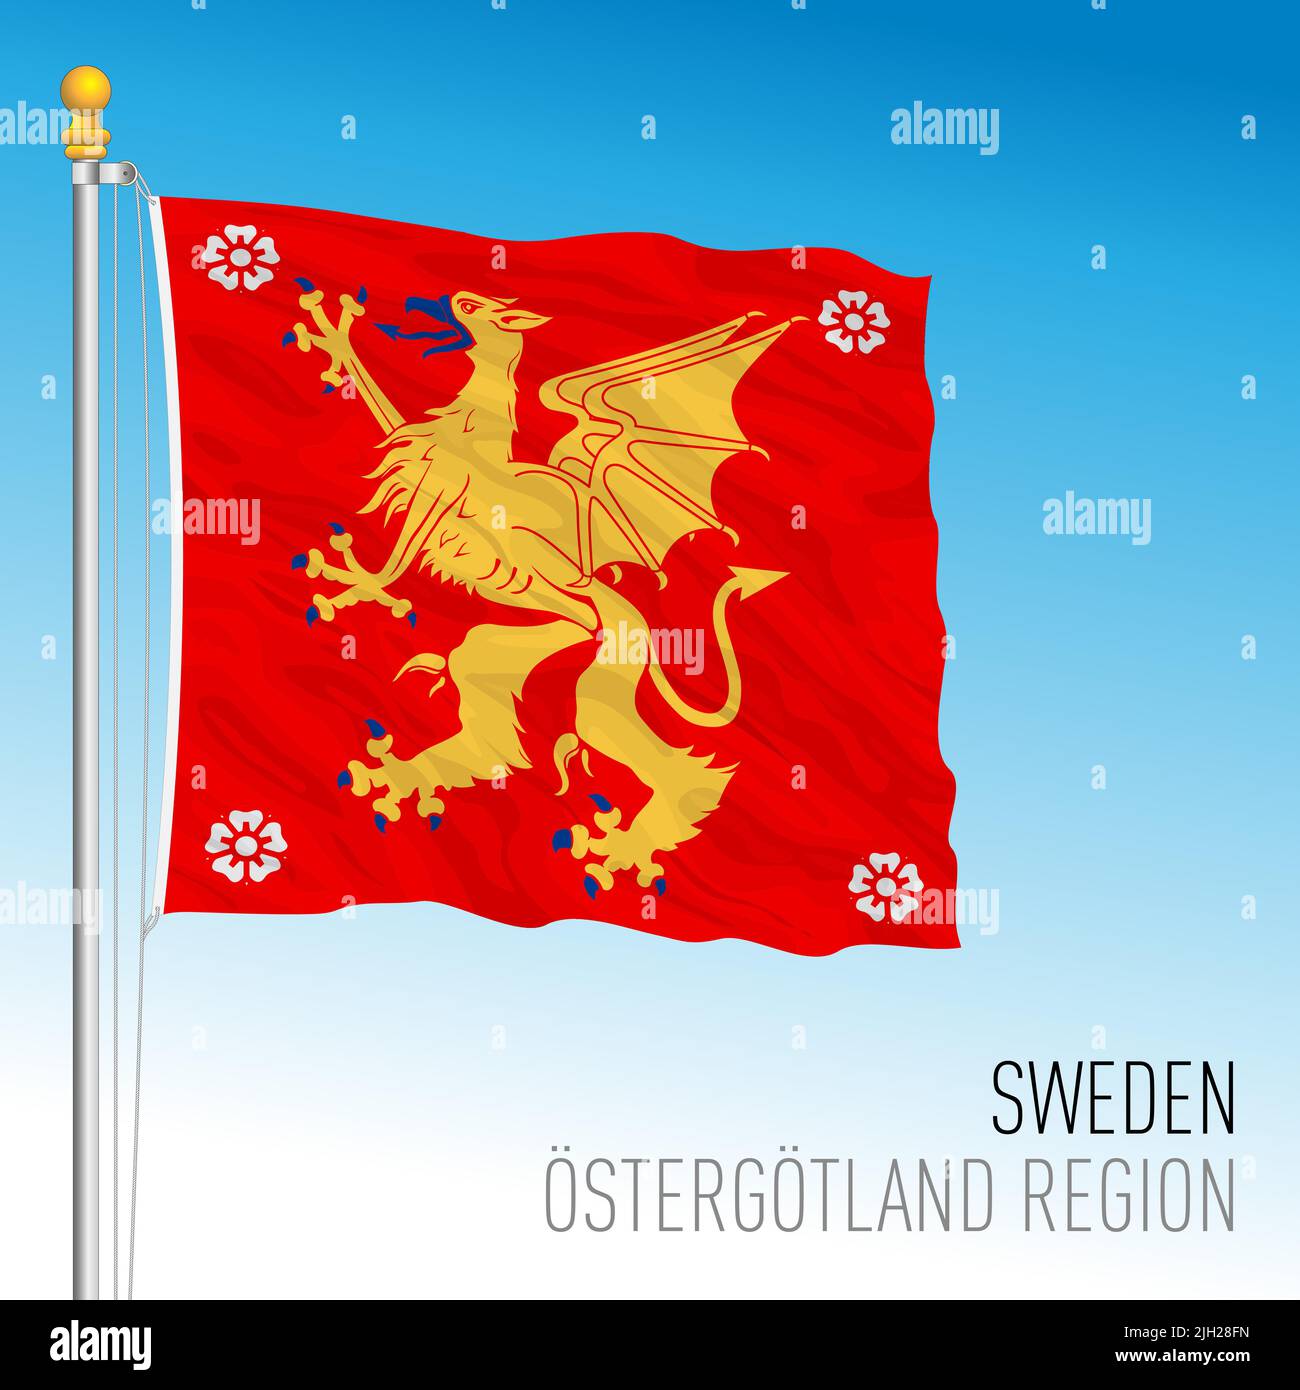 Ostergotland regional flag, Kingdom of Sweden, vector illustration Stock Vector